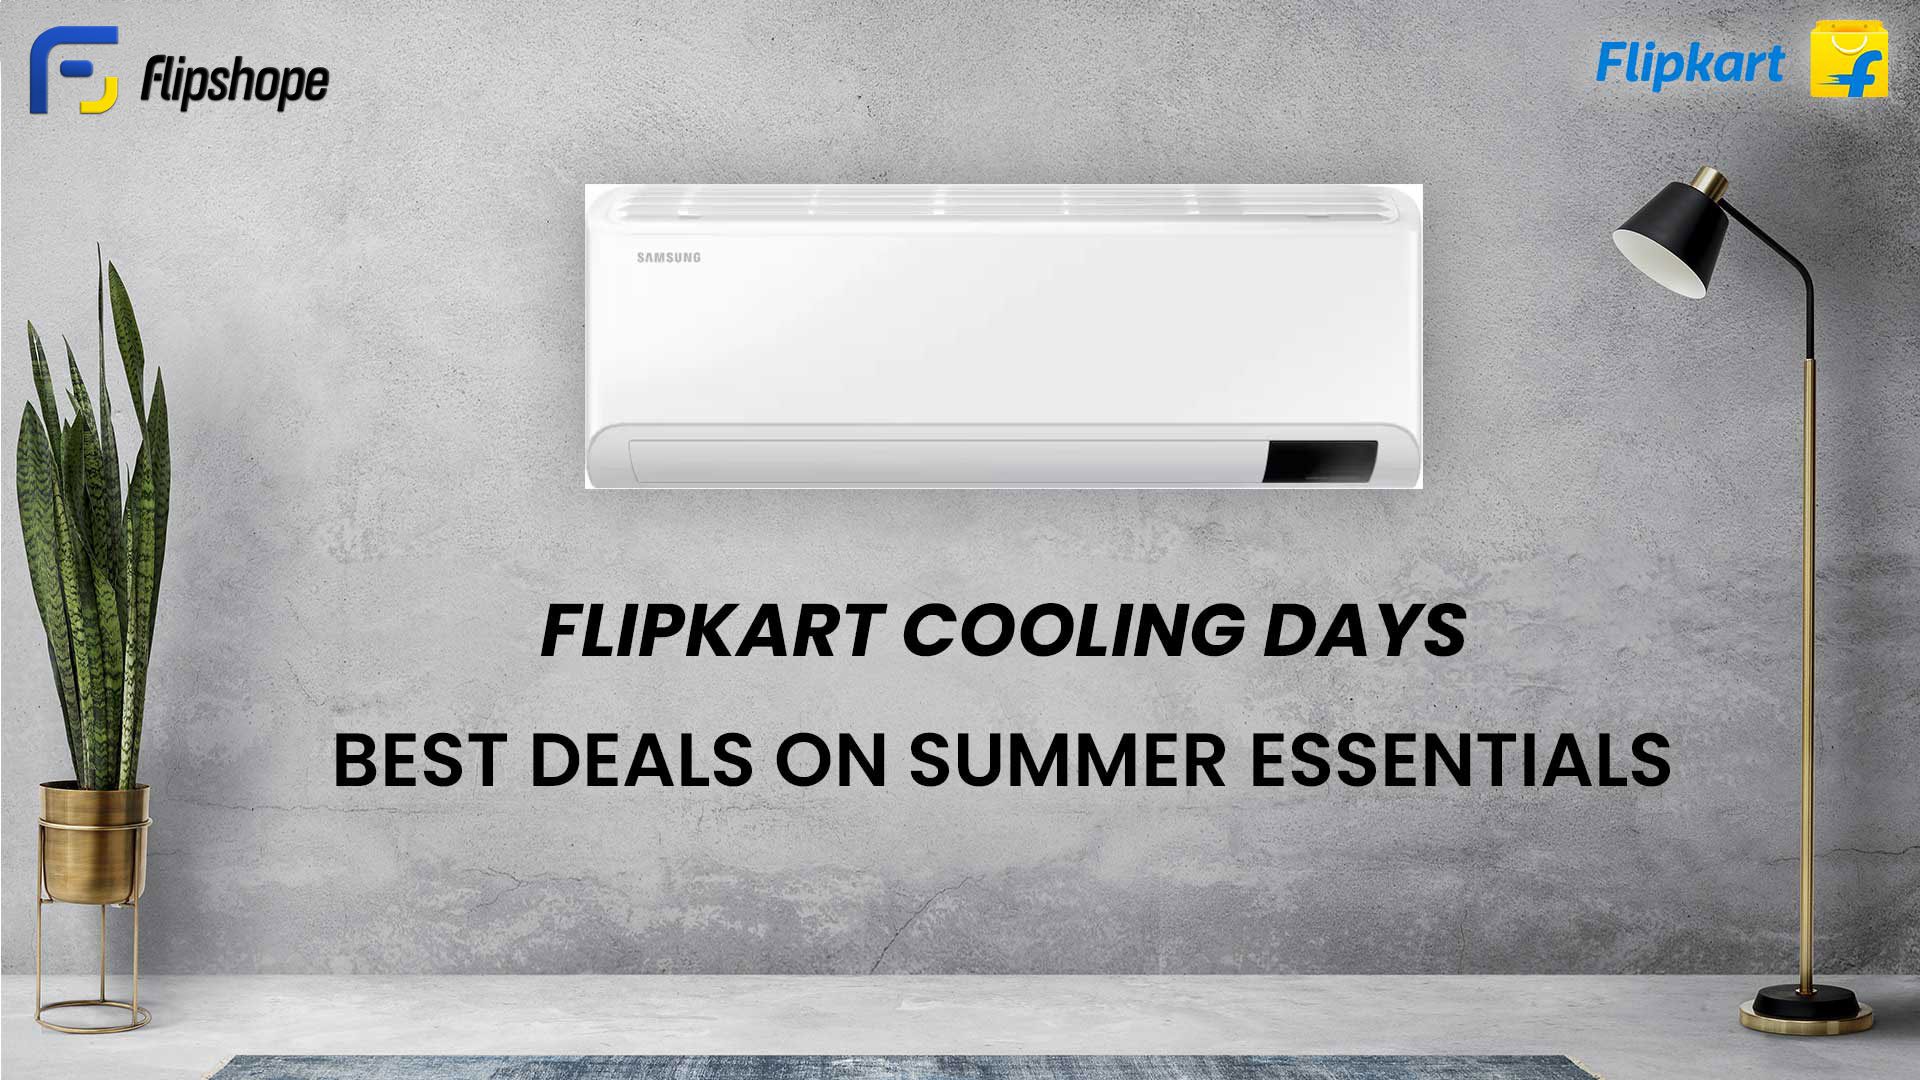 Flipkart offers and deals on cooling appliances